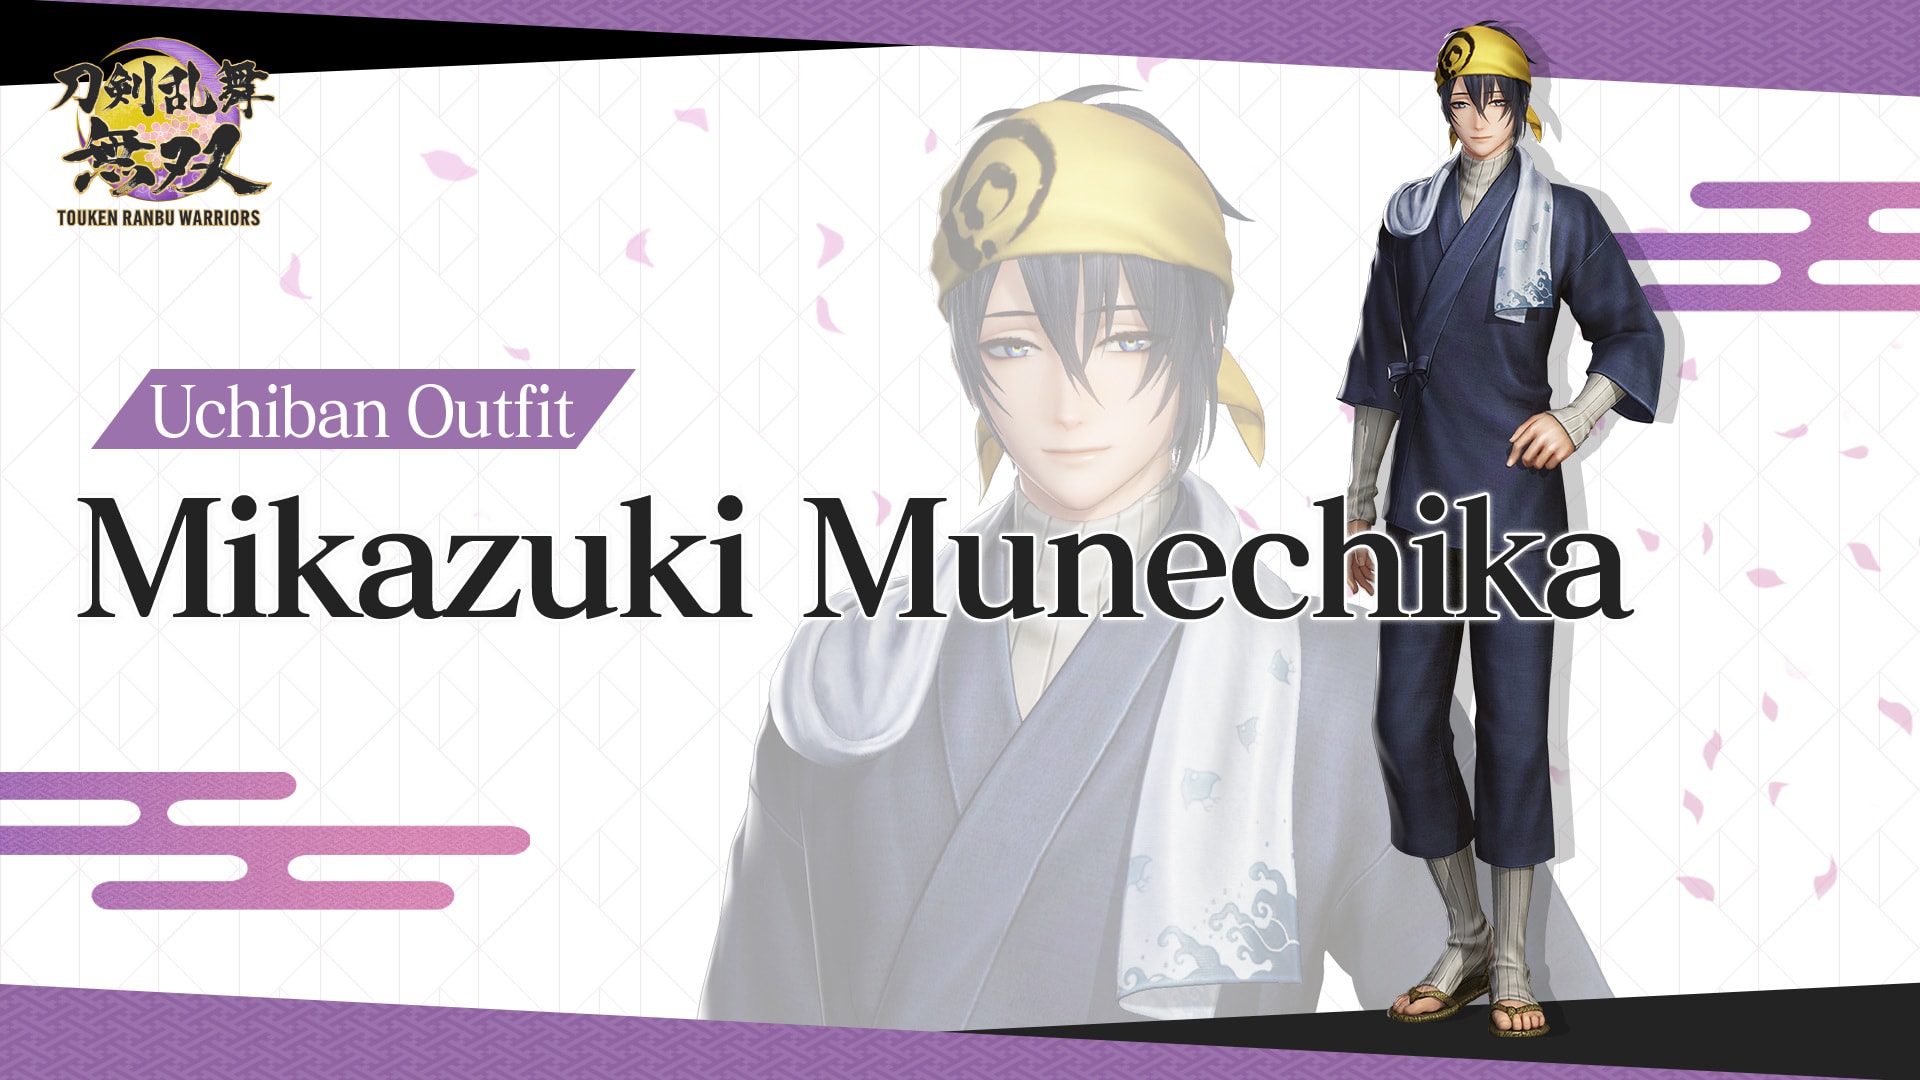 Uchiban Outfit "Mikazuki Munechika"